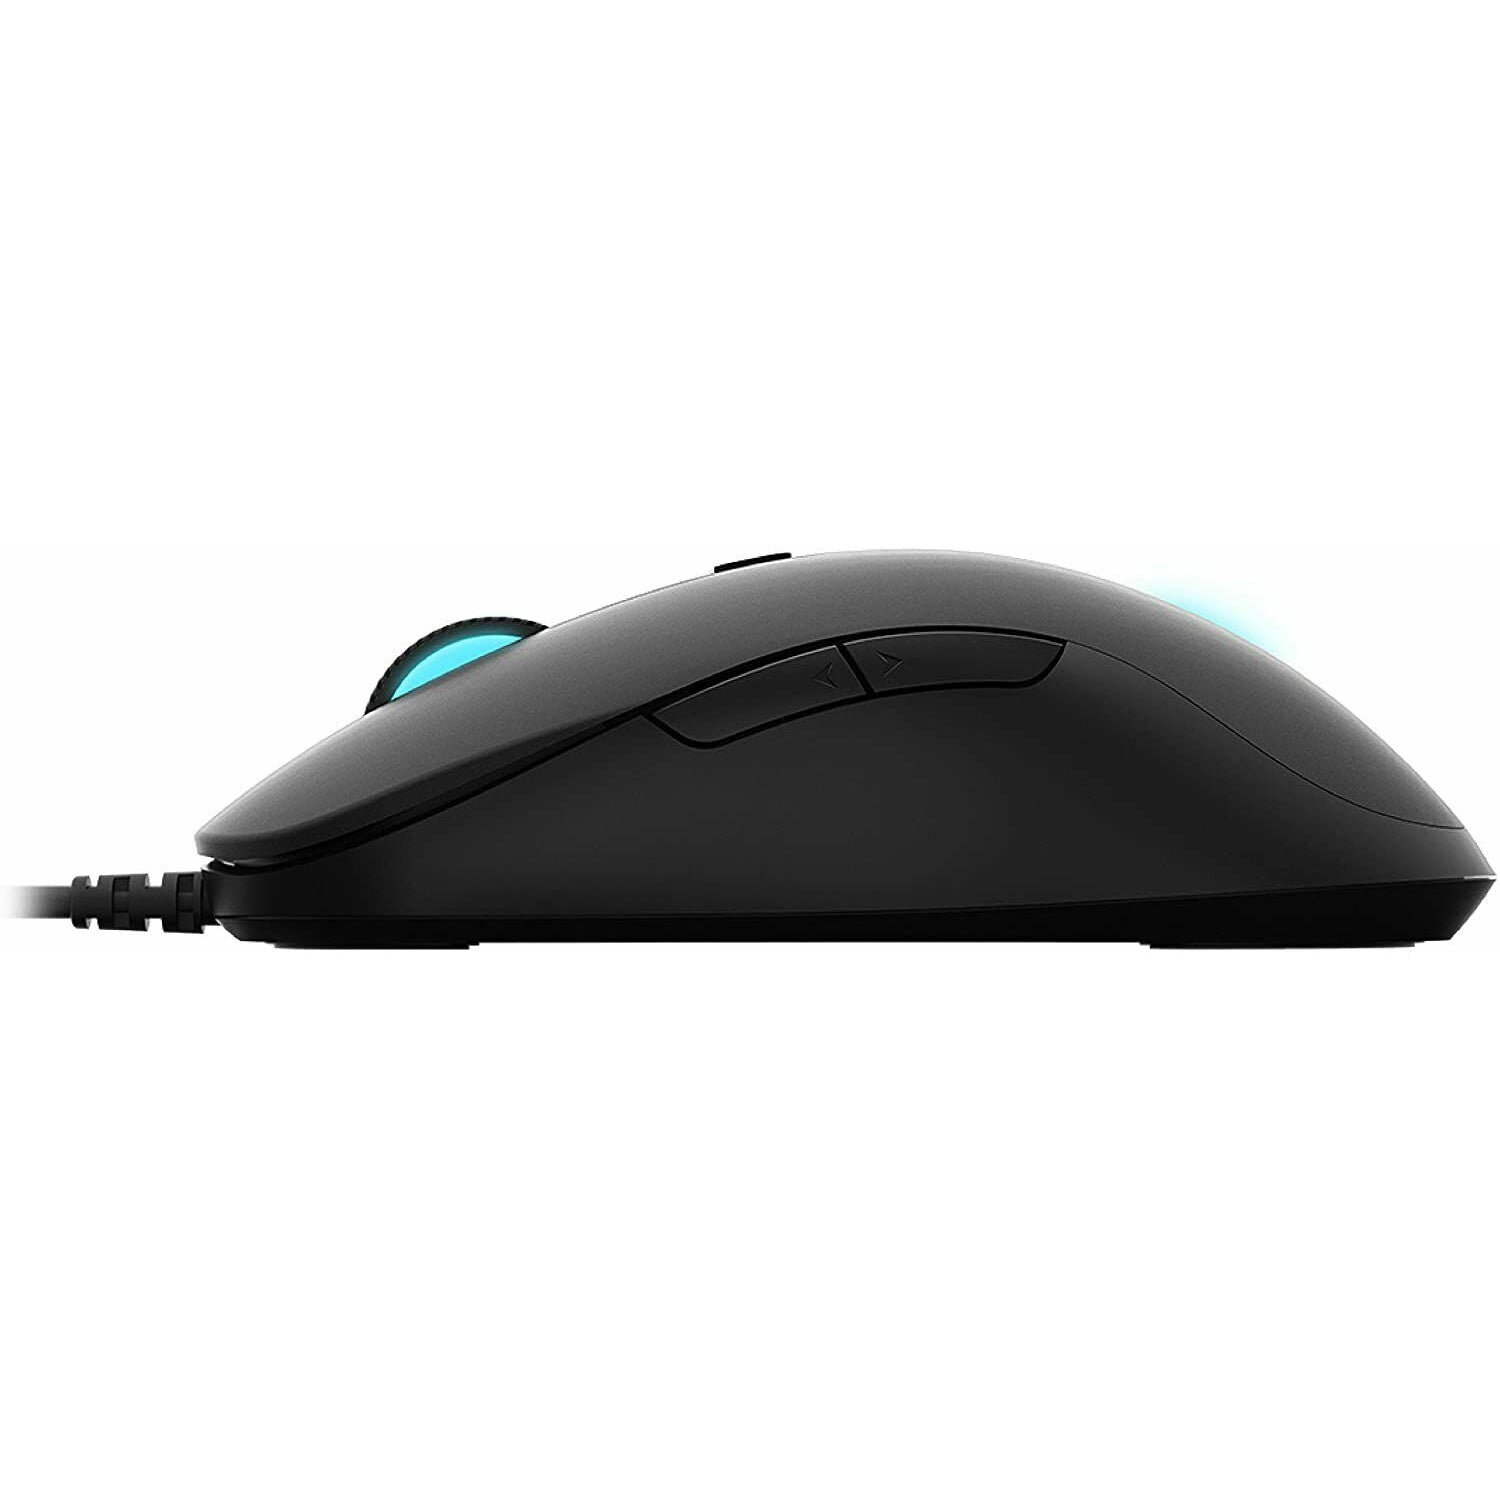 Rapoo V16 Optical Wired Gaming Mouse - Black - Refurbished Excellent